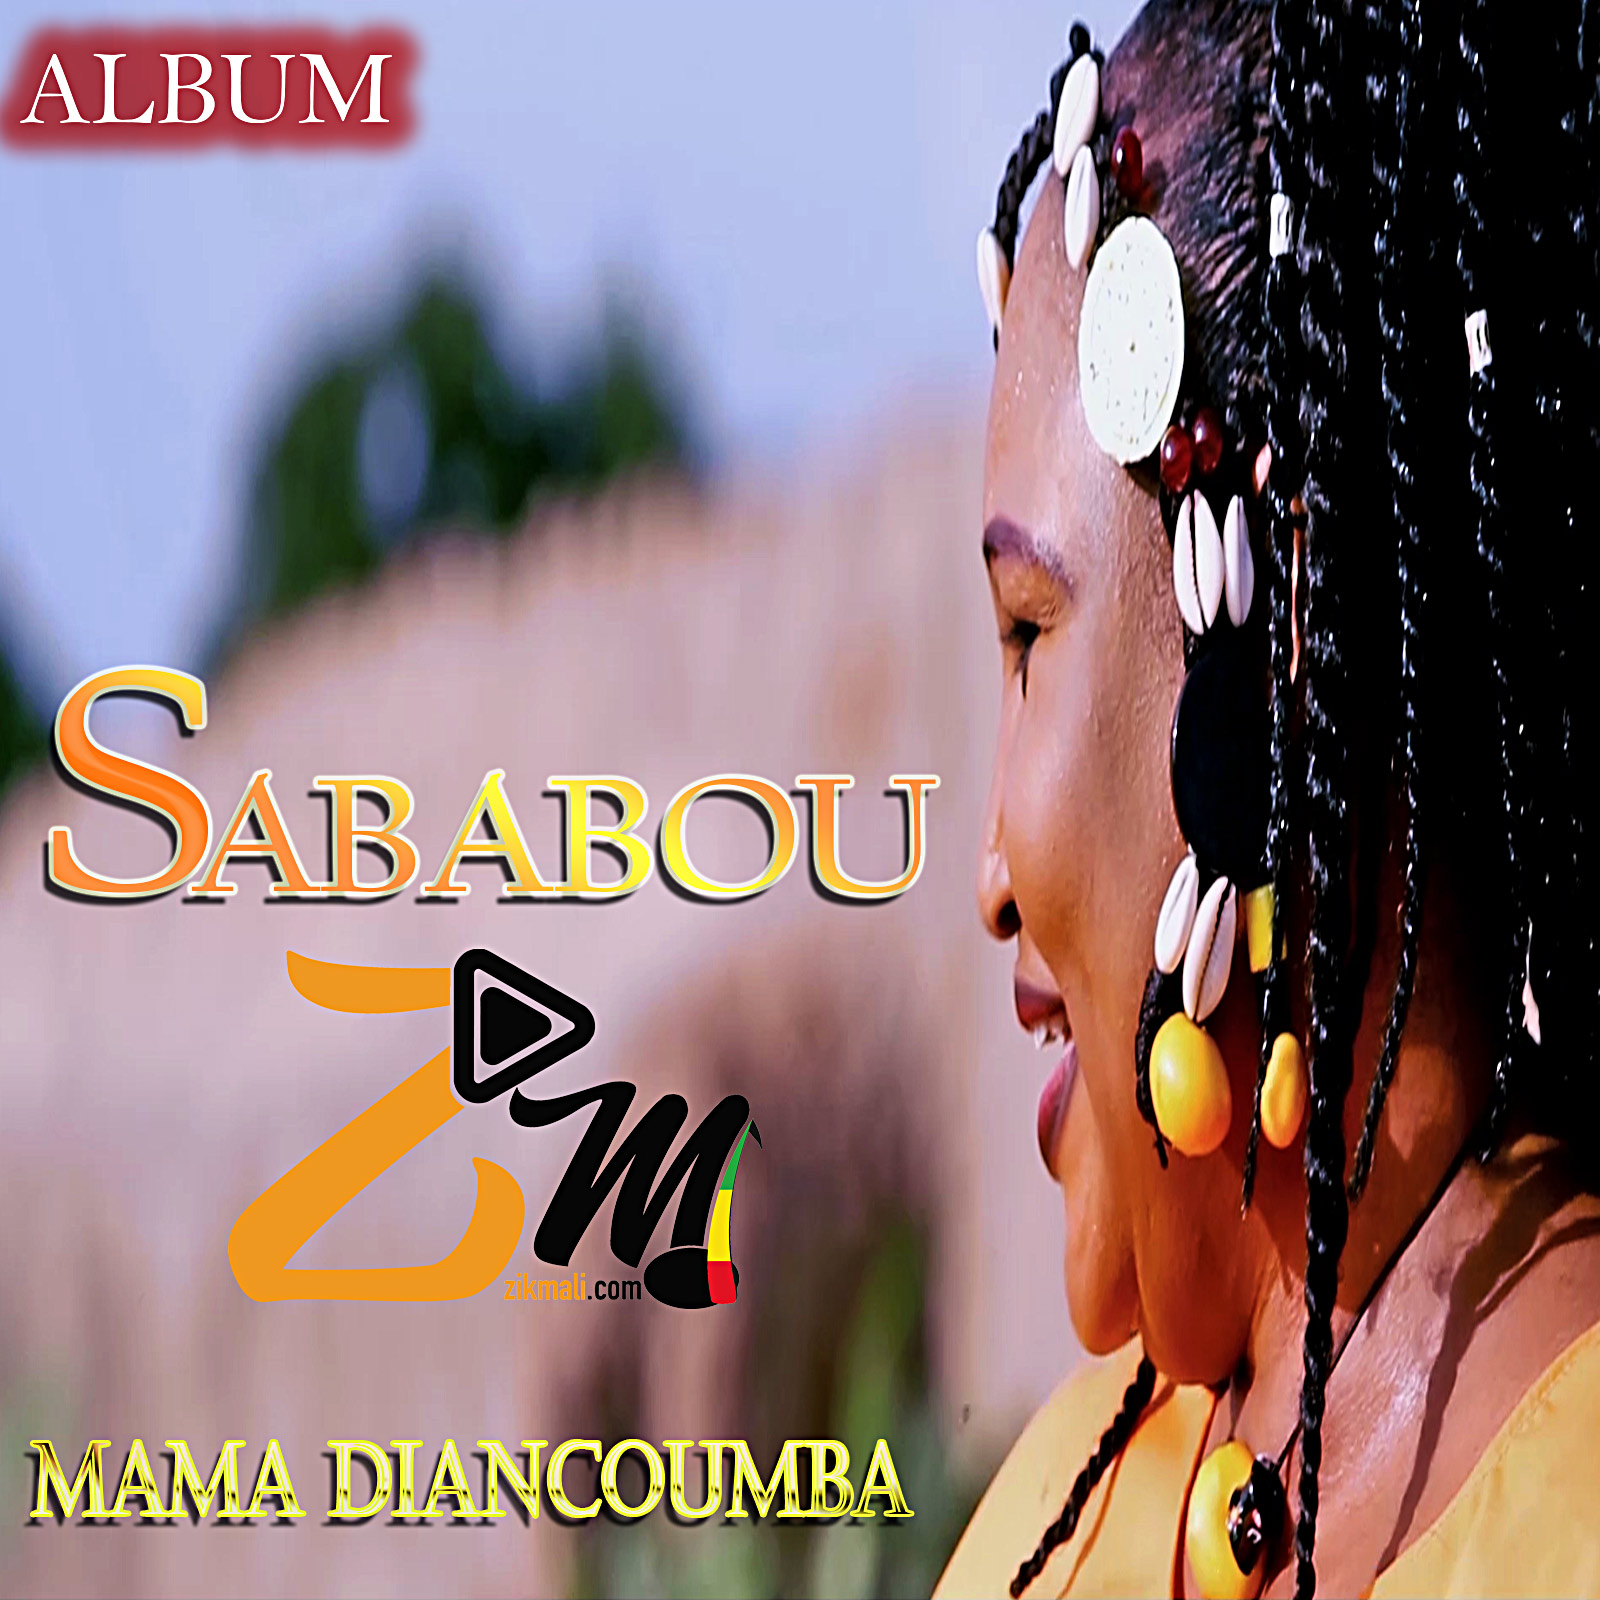 Mama Diancoumba Album: Sababou - (8 Tracks)